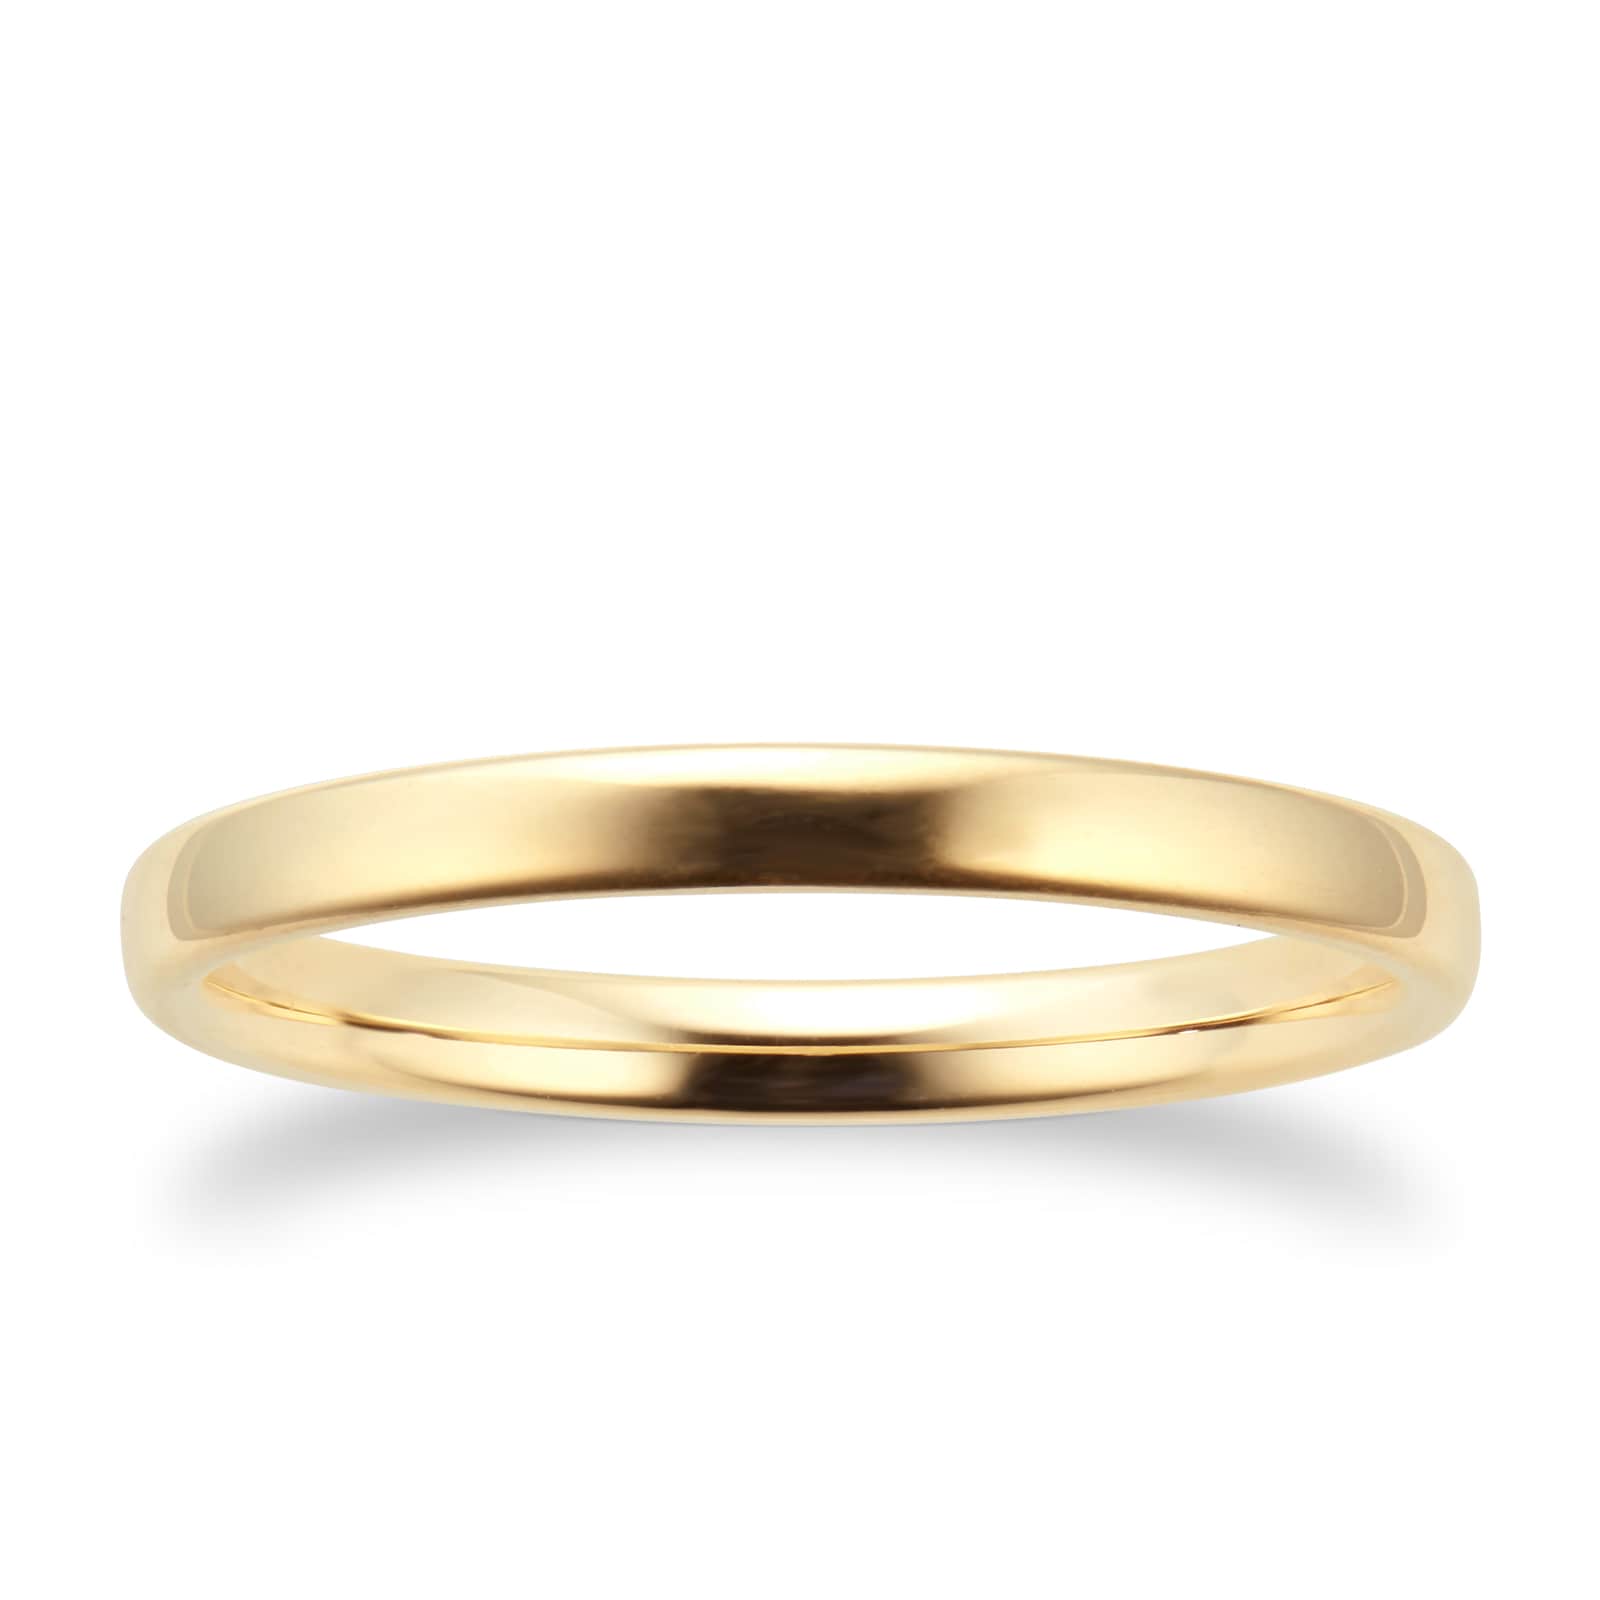 2mm Slight Court Standard Wedding Ring In 9 Carat Yellow Gold Ring Size M